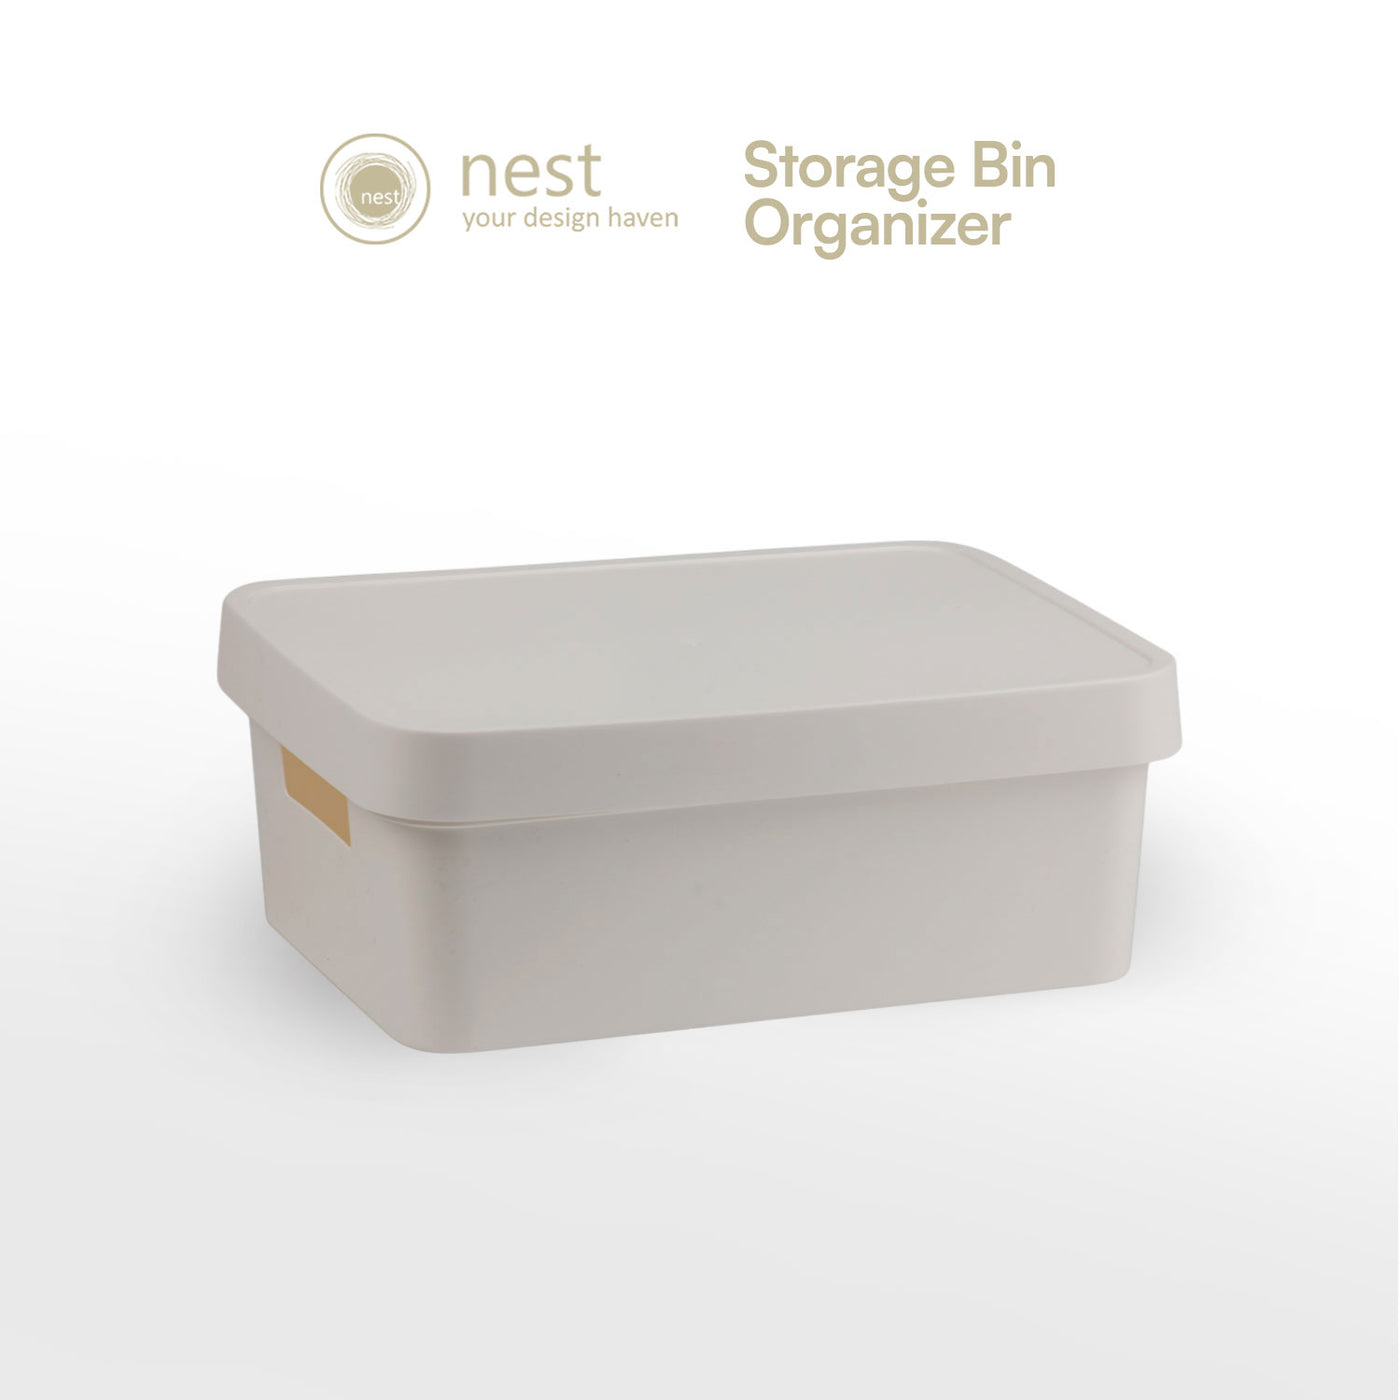 NEST DESIGN LAB Storage Box Organizer w/ Lid